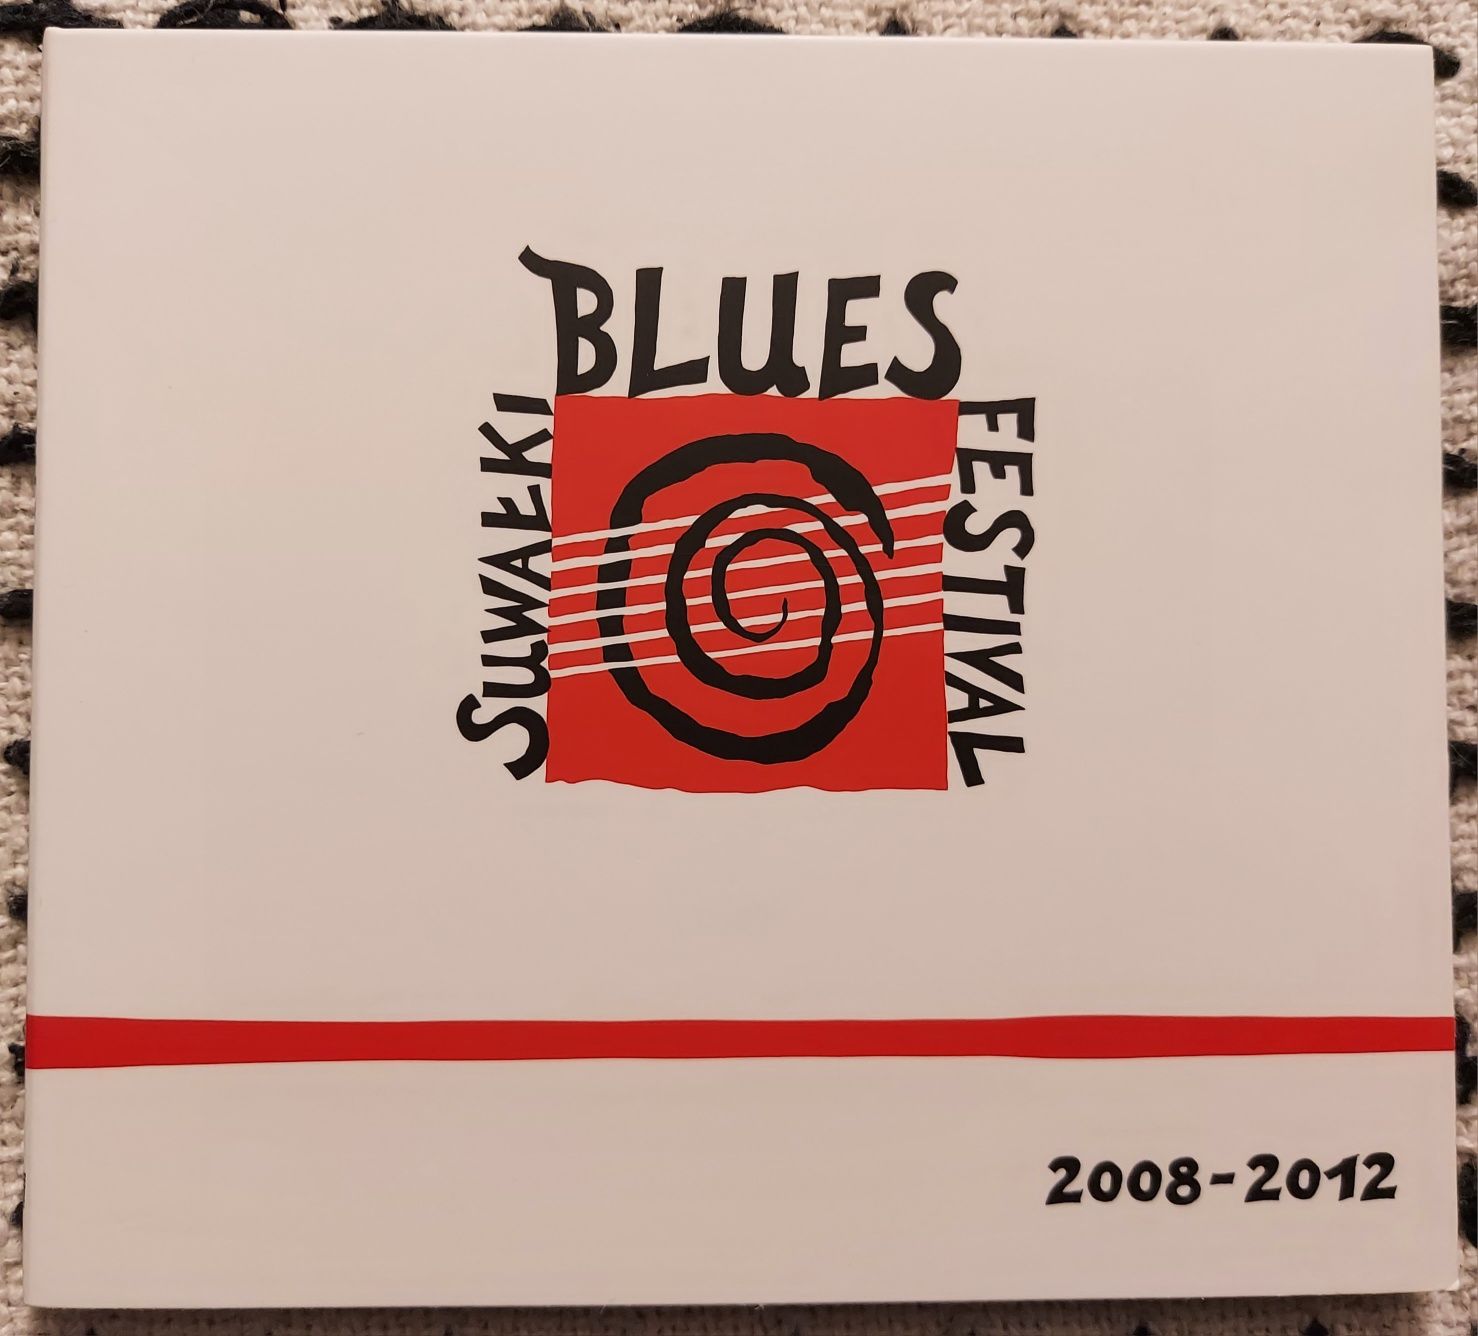 Suwałki Blues Festival 2008 - 2012 CD